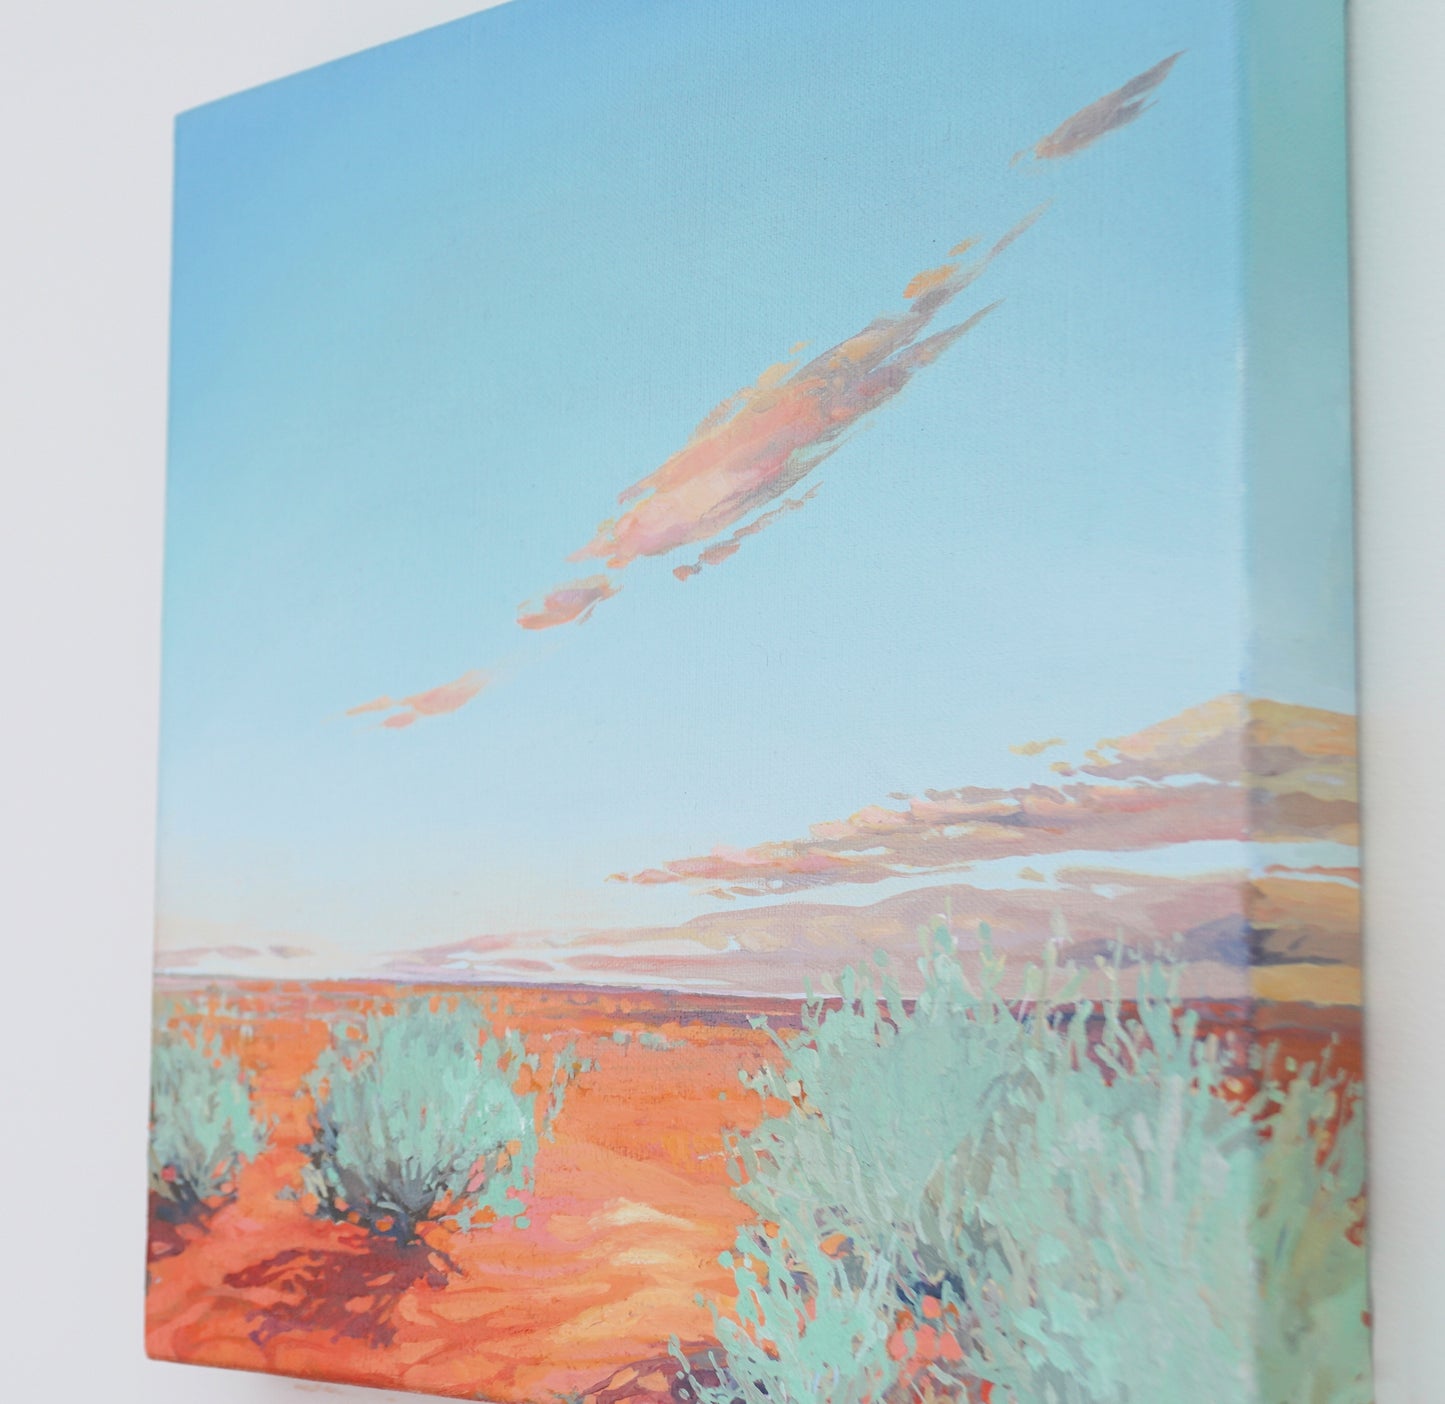 Red Dirt & Blue Sky Australian landscape